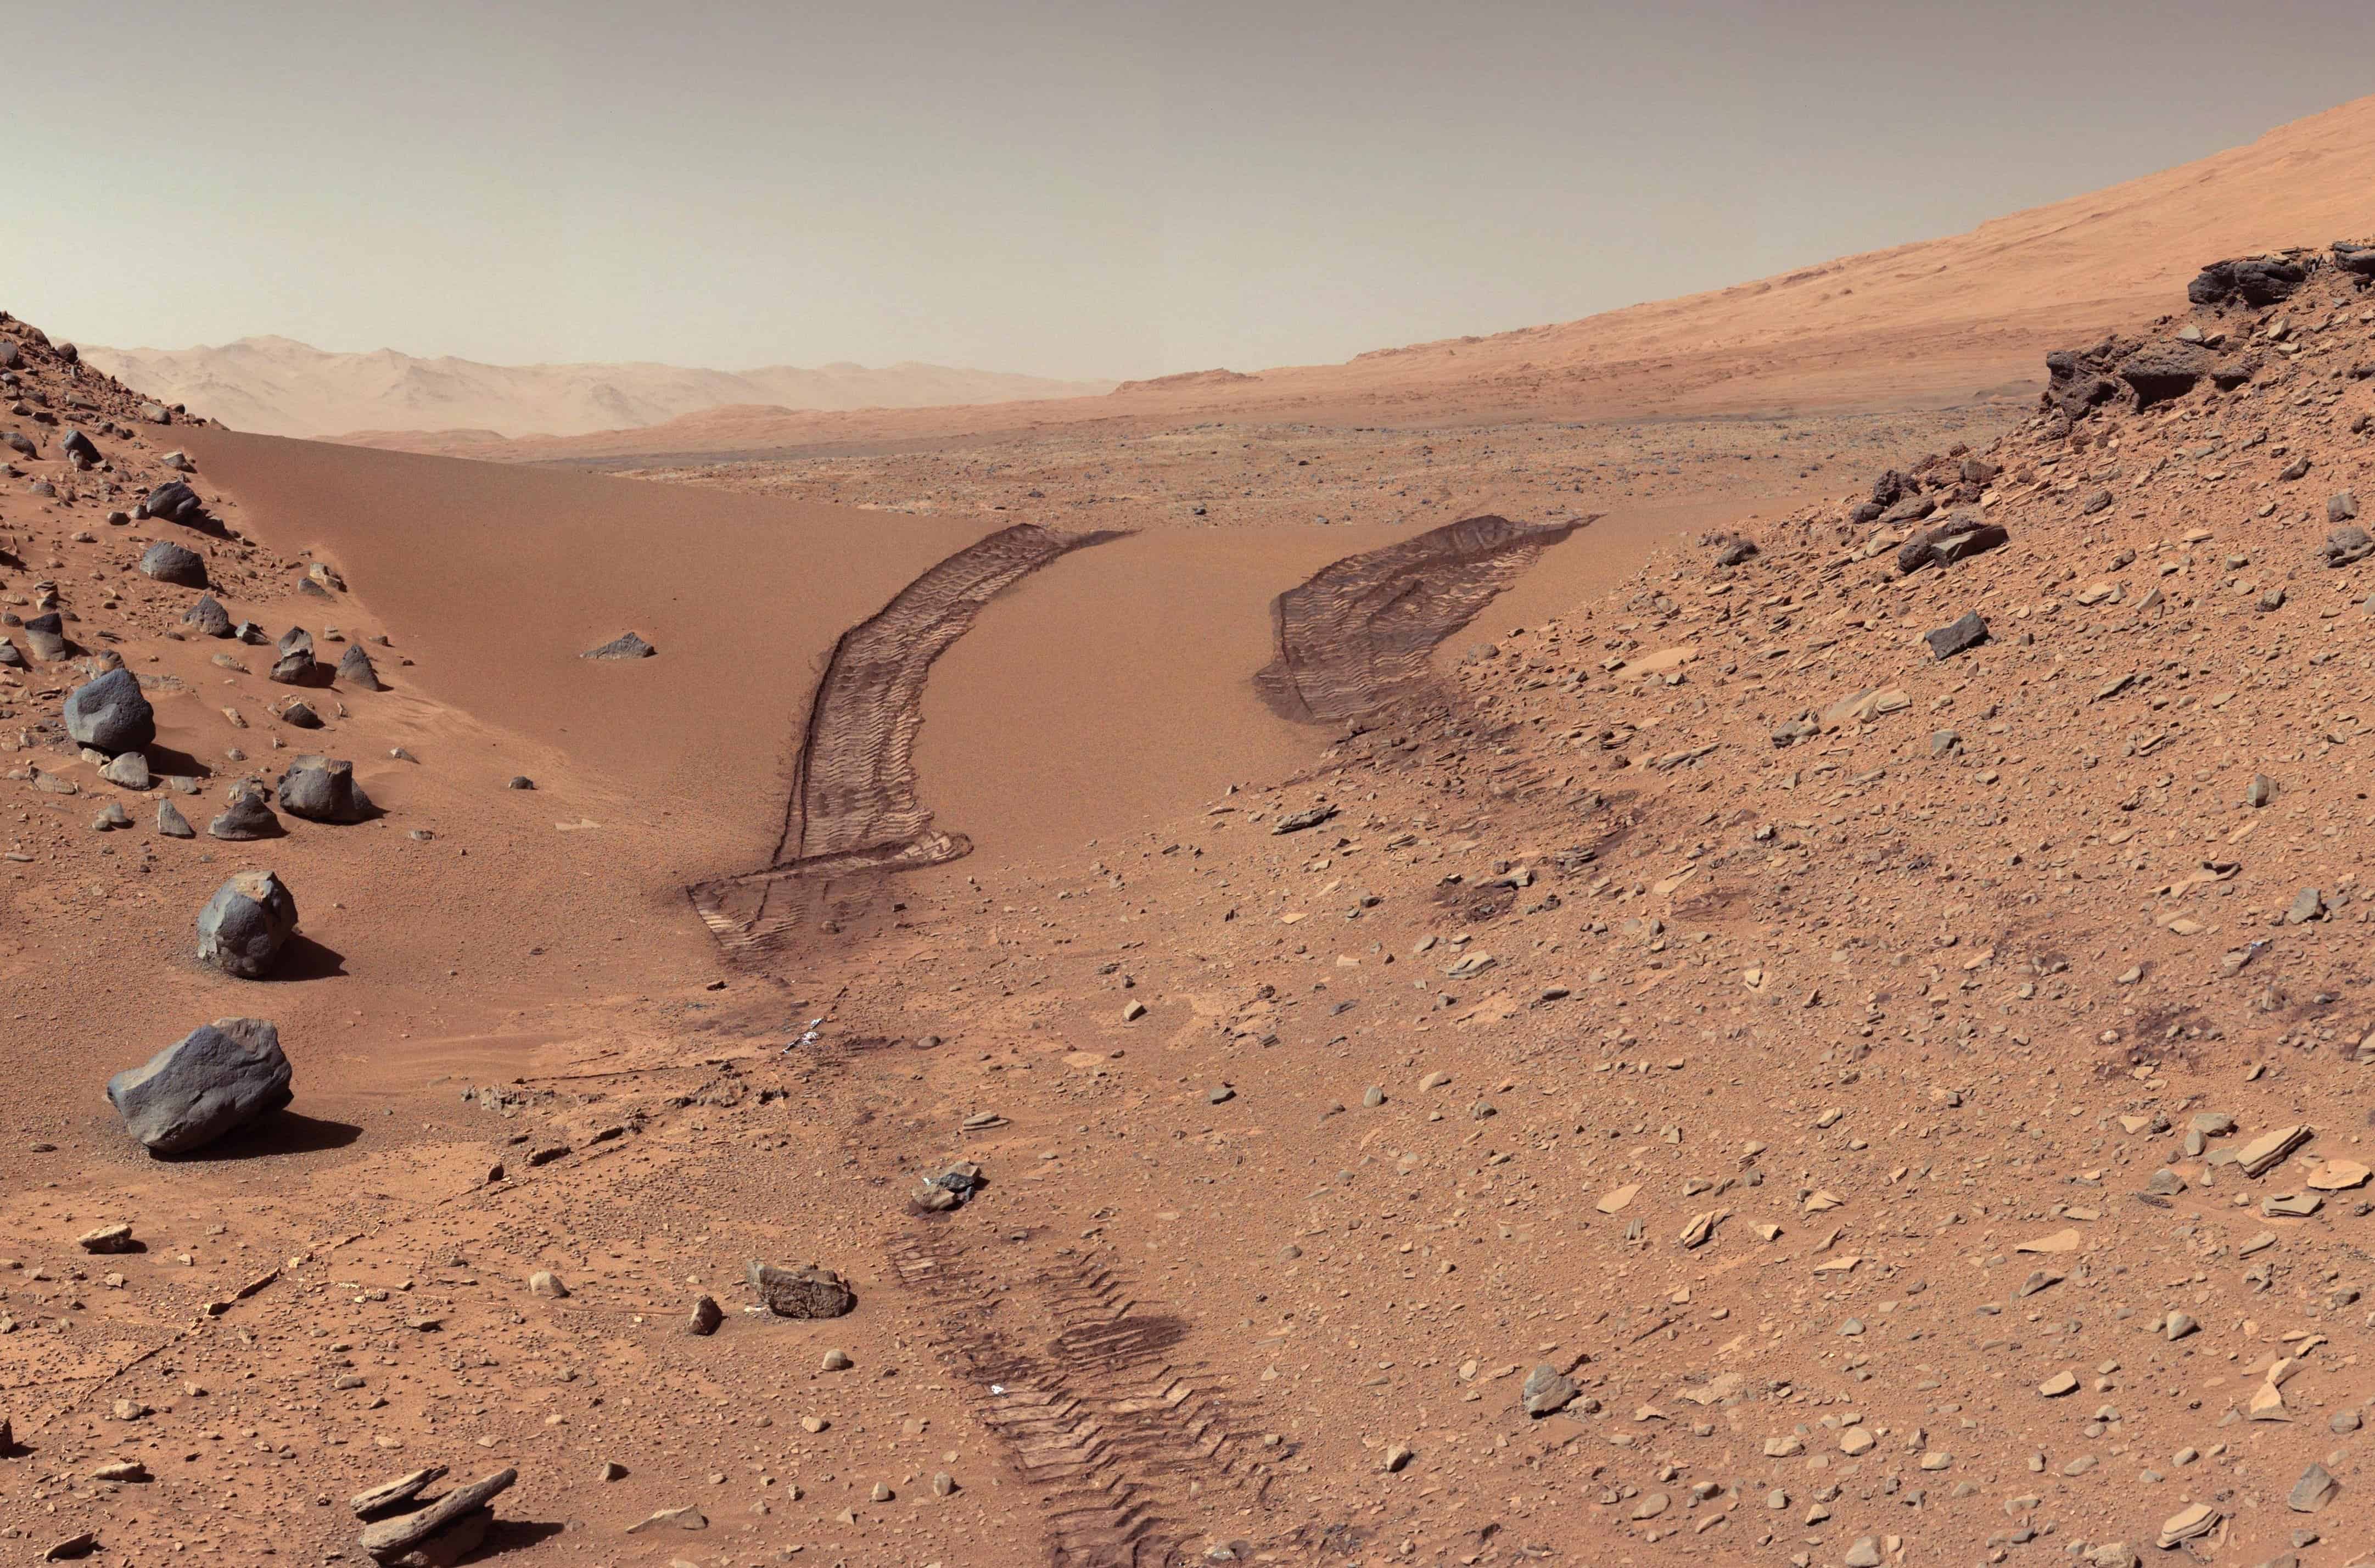 Curiosity's tracks on Martian soil. Image credits: NASA / JPL.